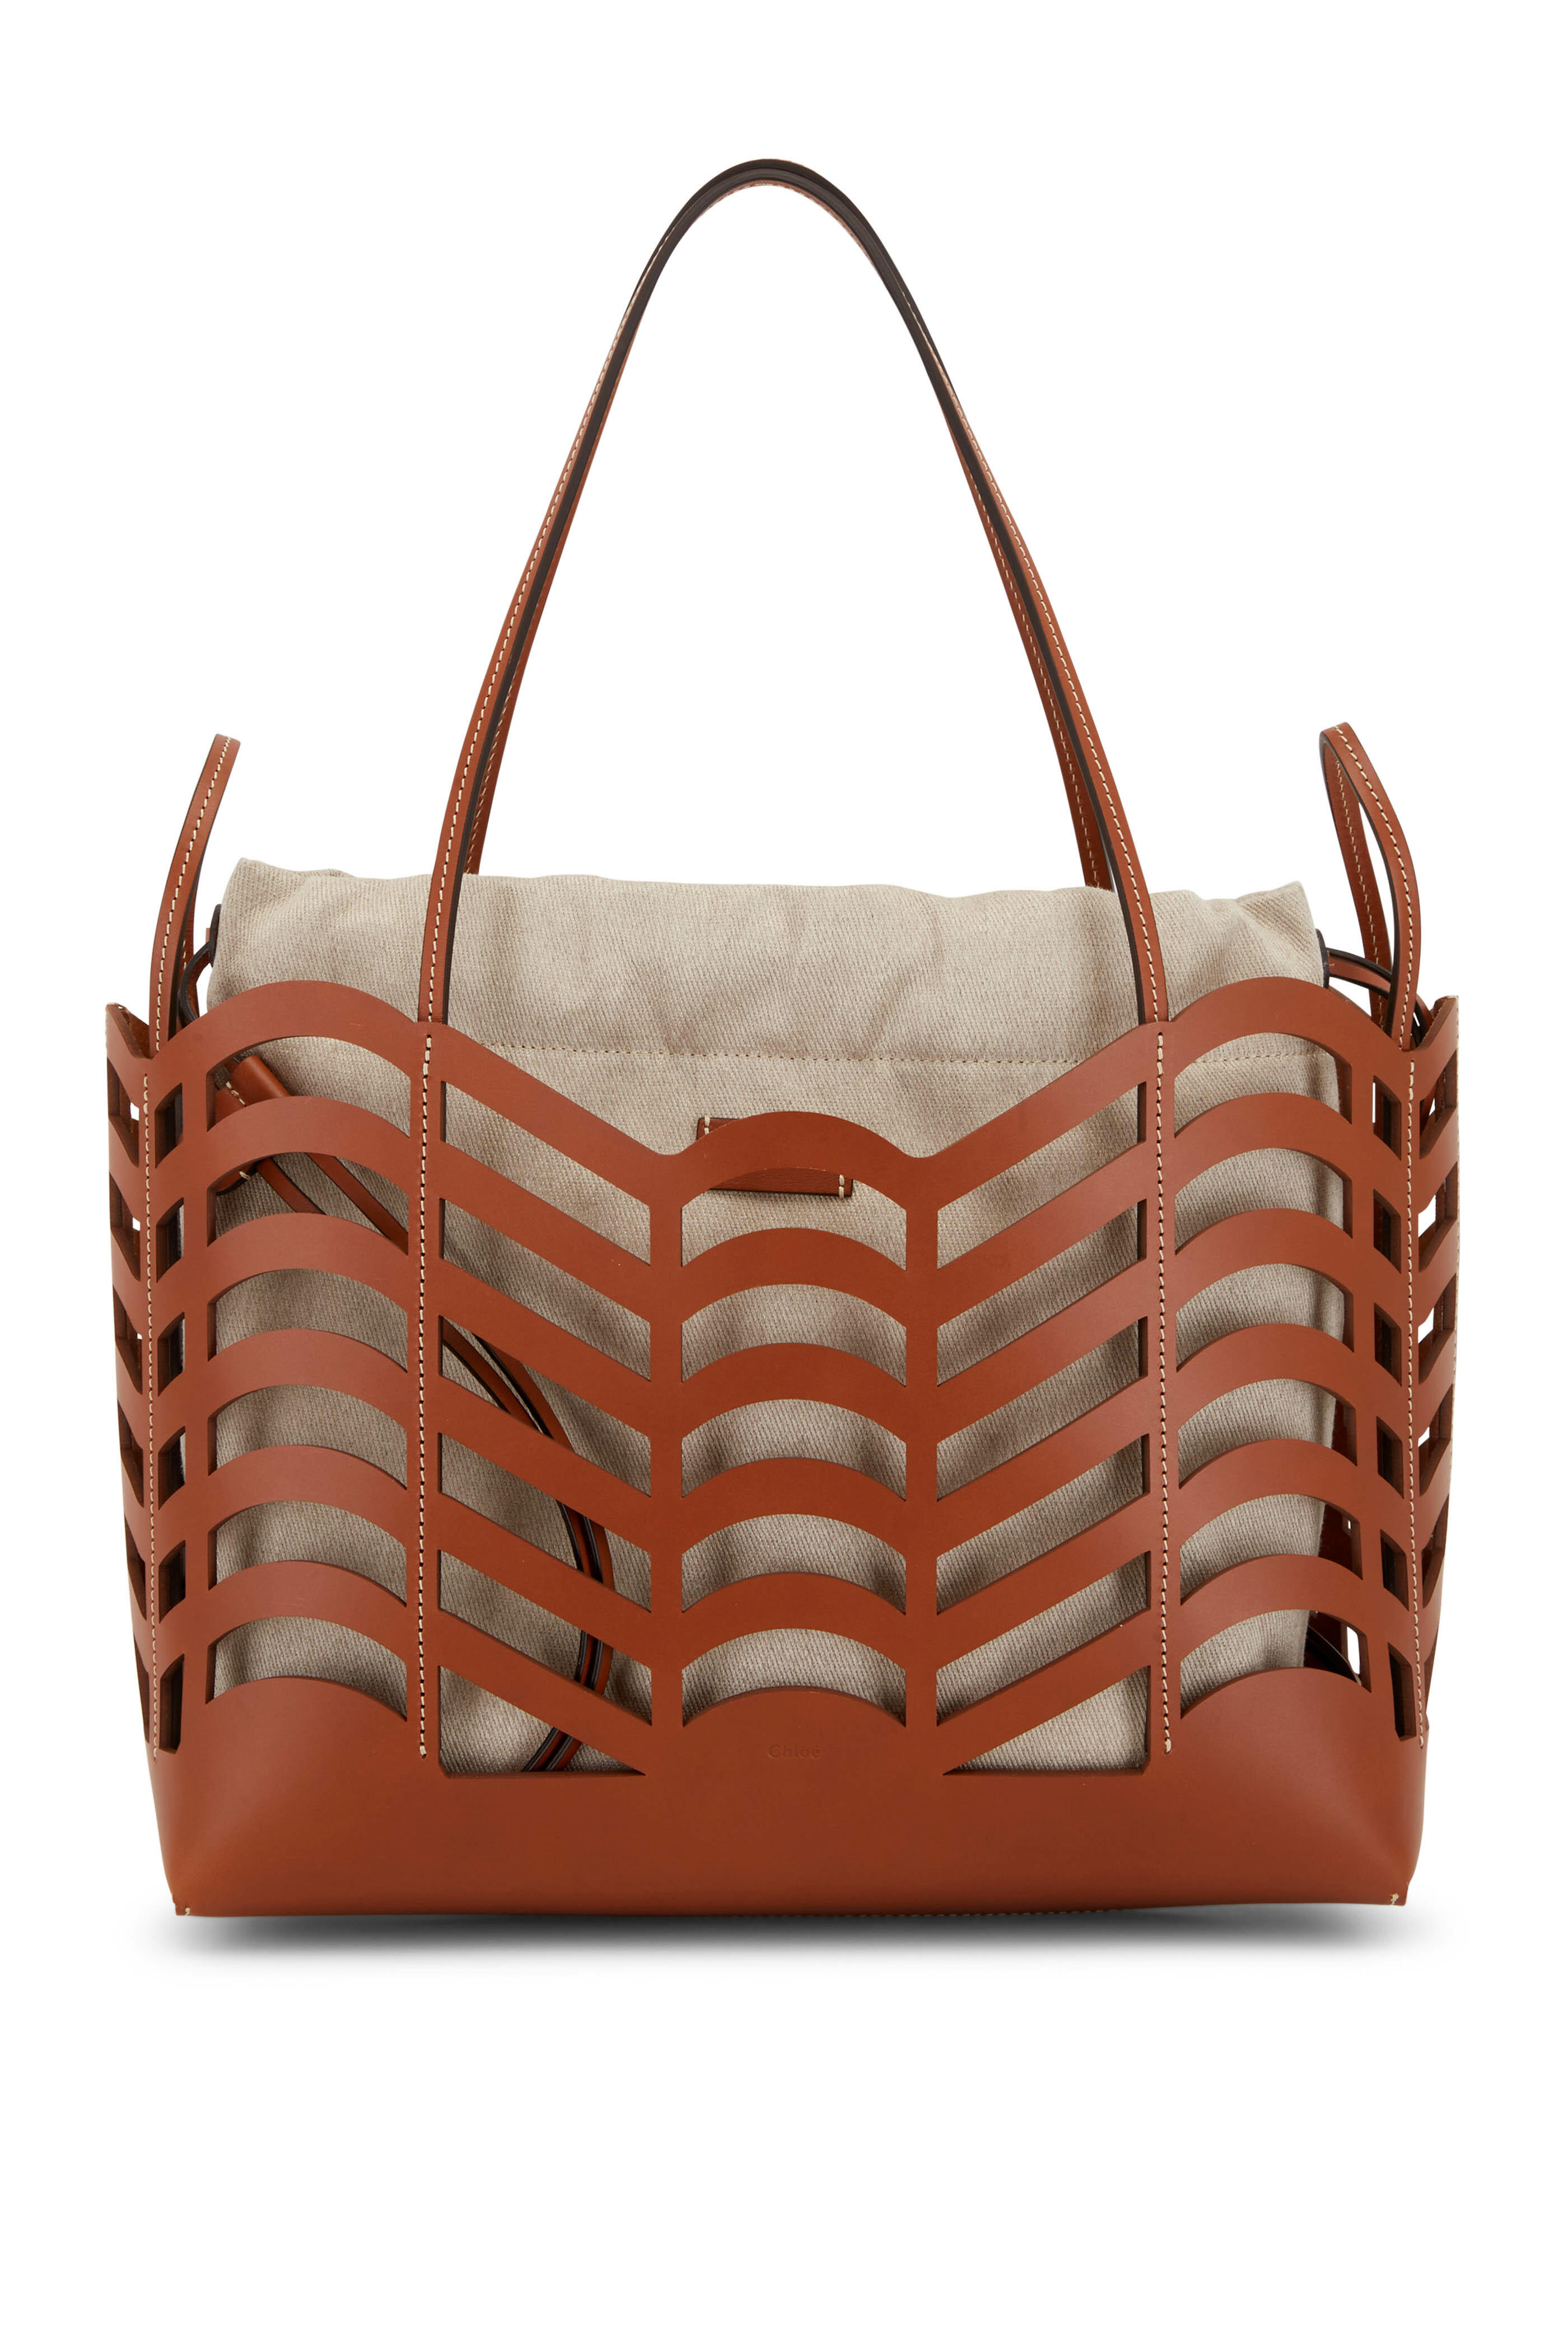 Caramel Basket Bag